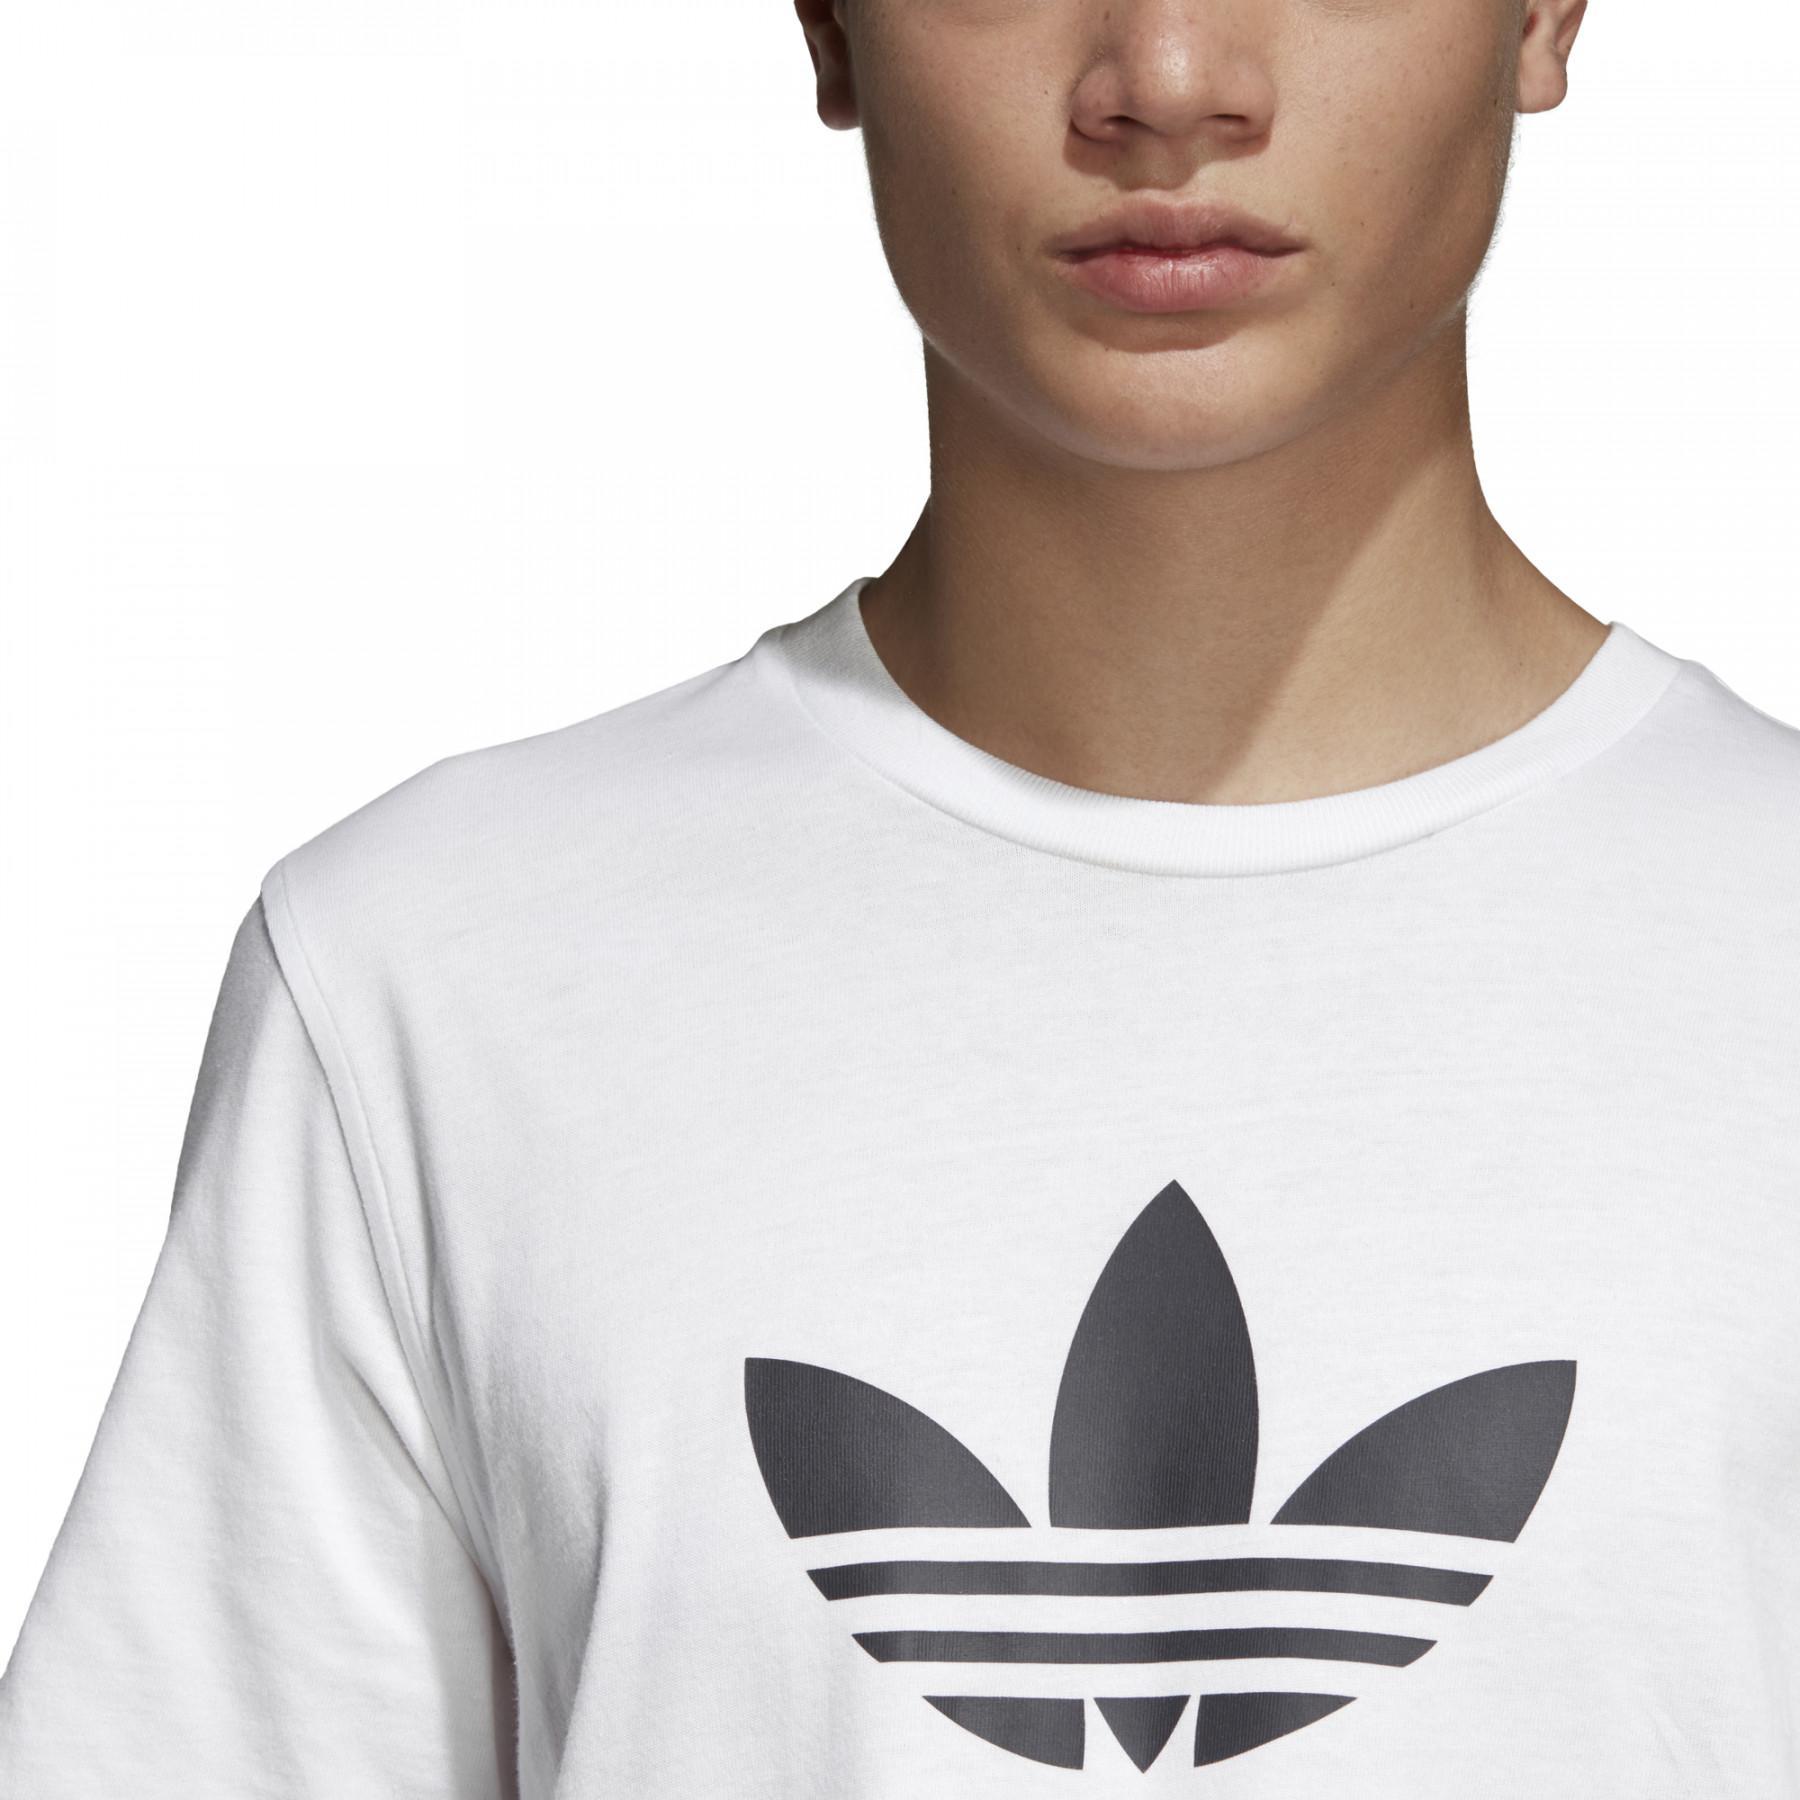 T-shirt adidas Trefoil Clover